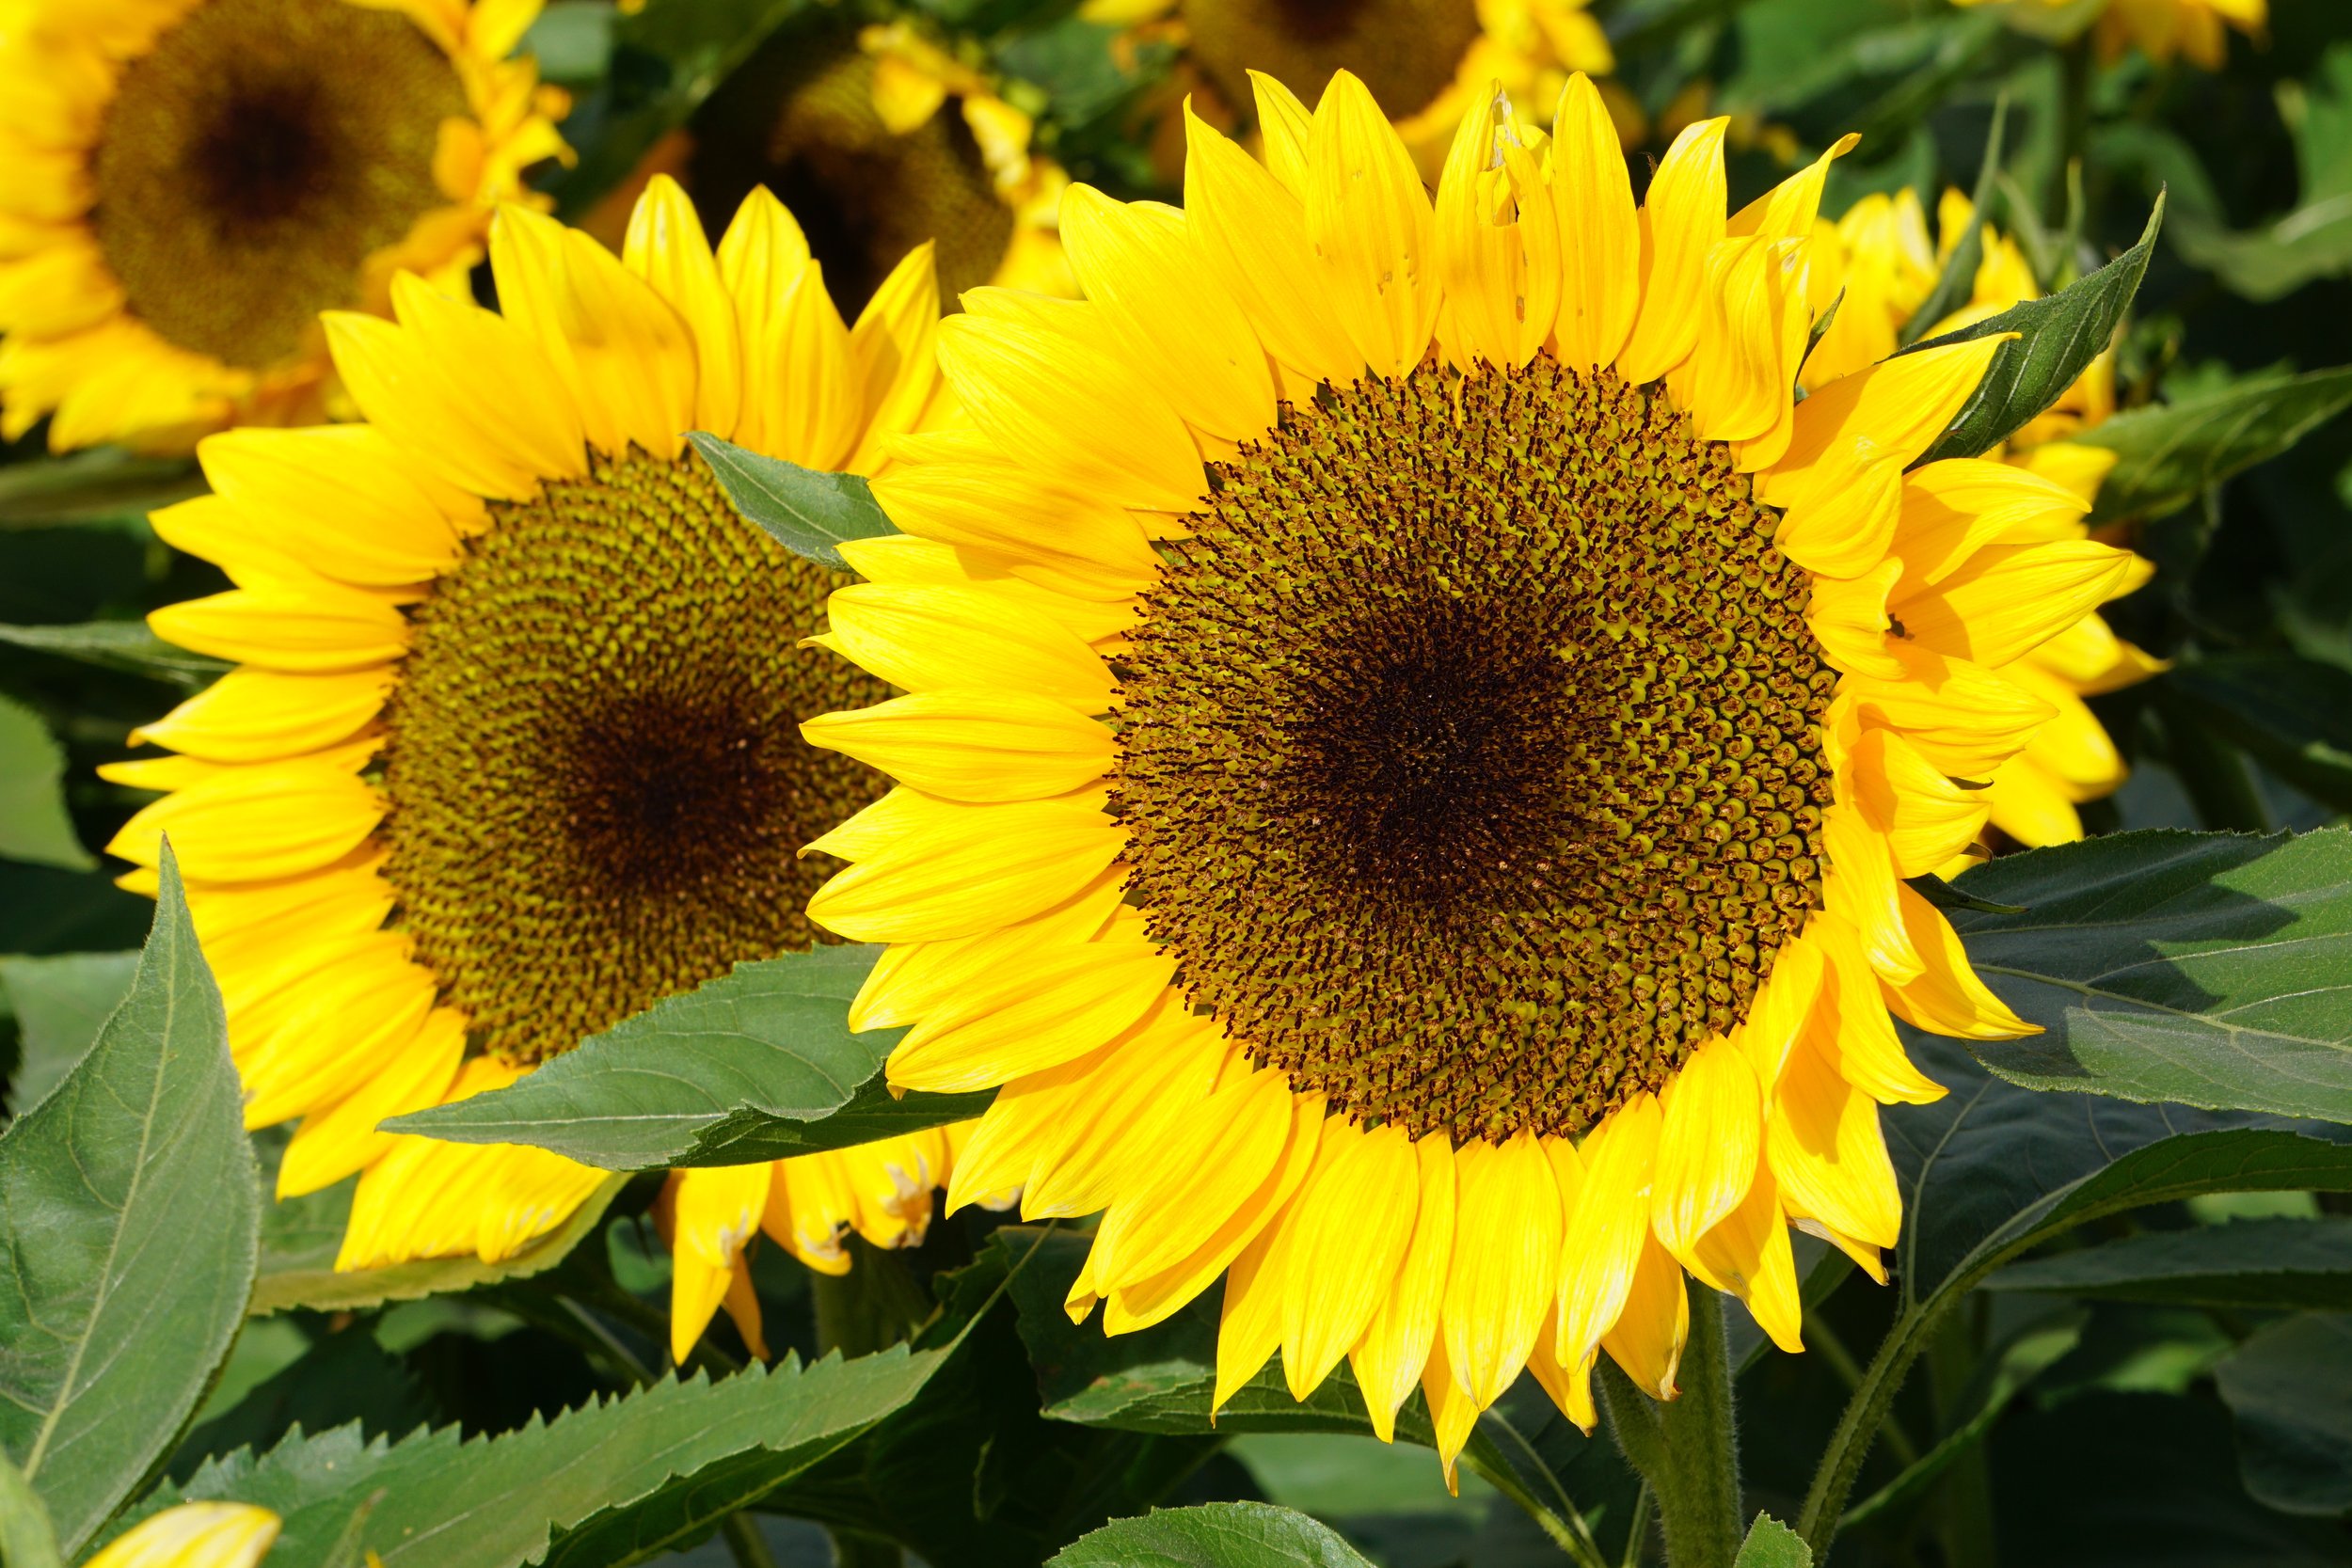 Sister Sunflowers